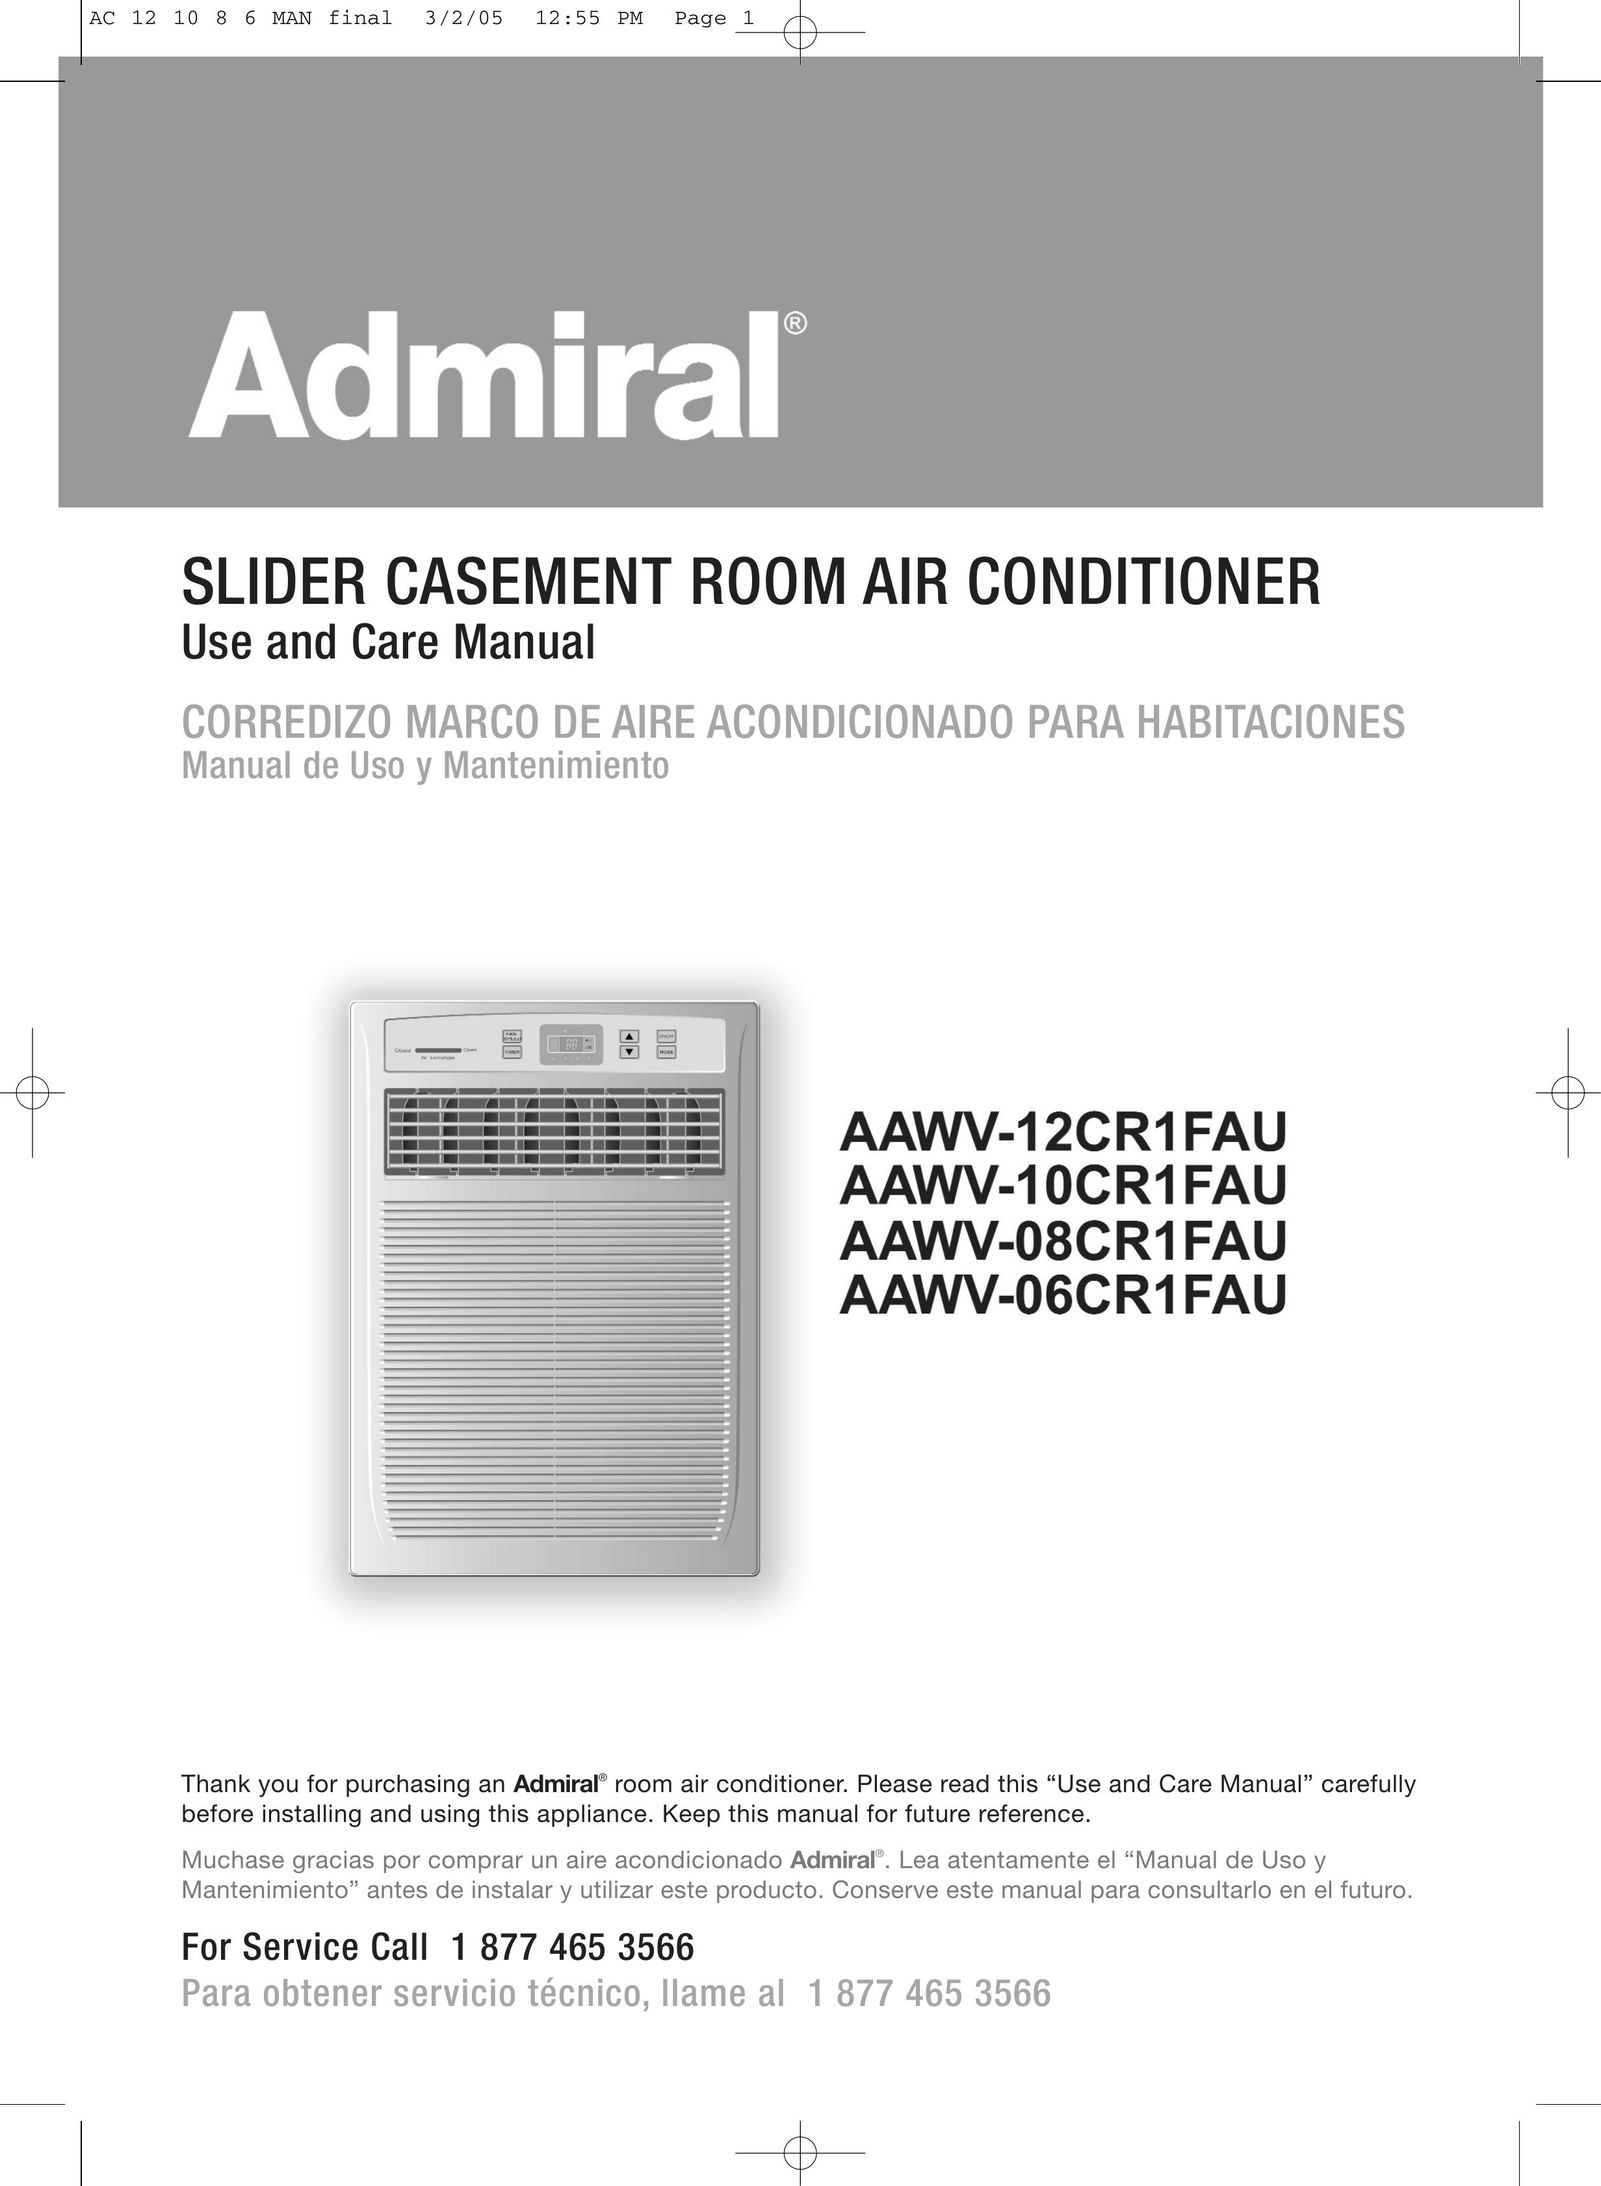 Admiral AAWV-08CR1FAU Air Conditioner User Manual